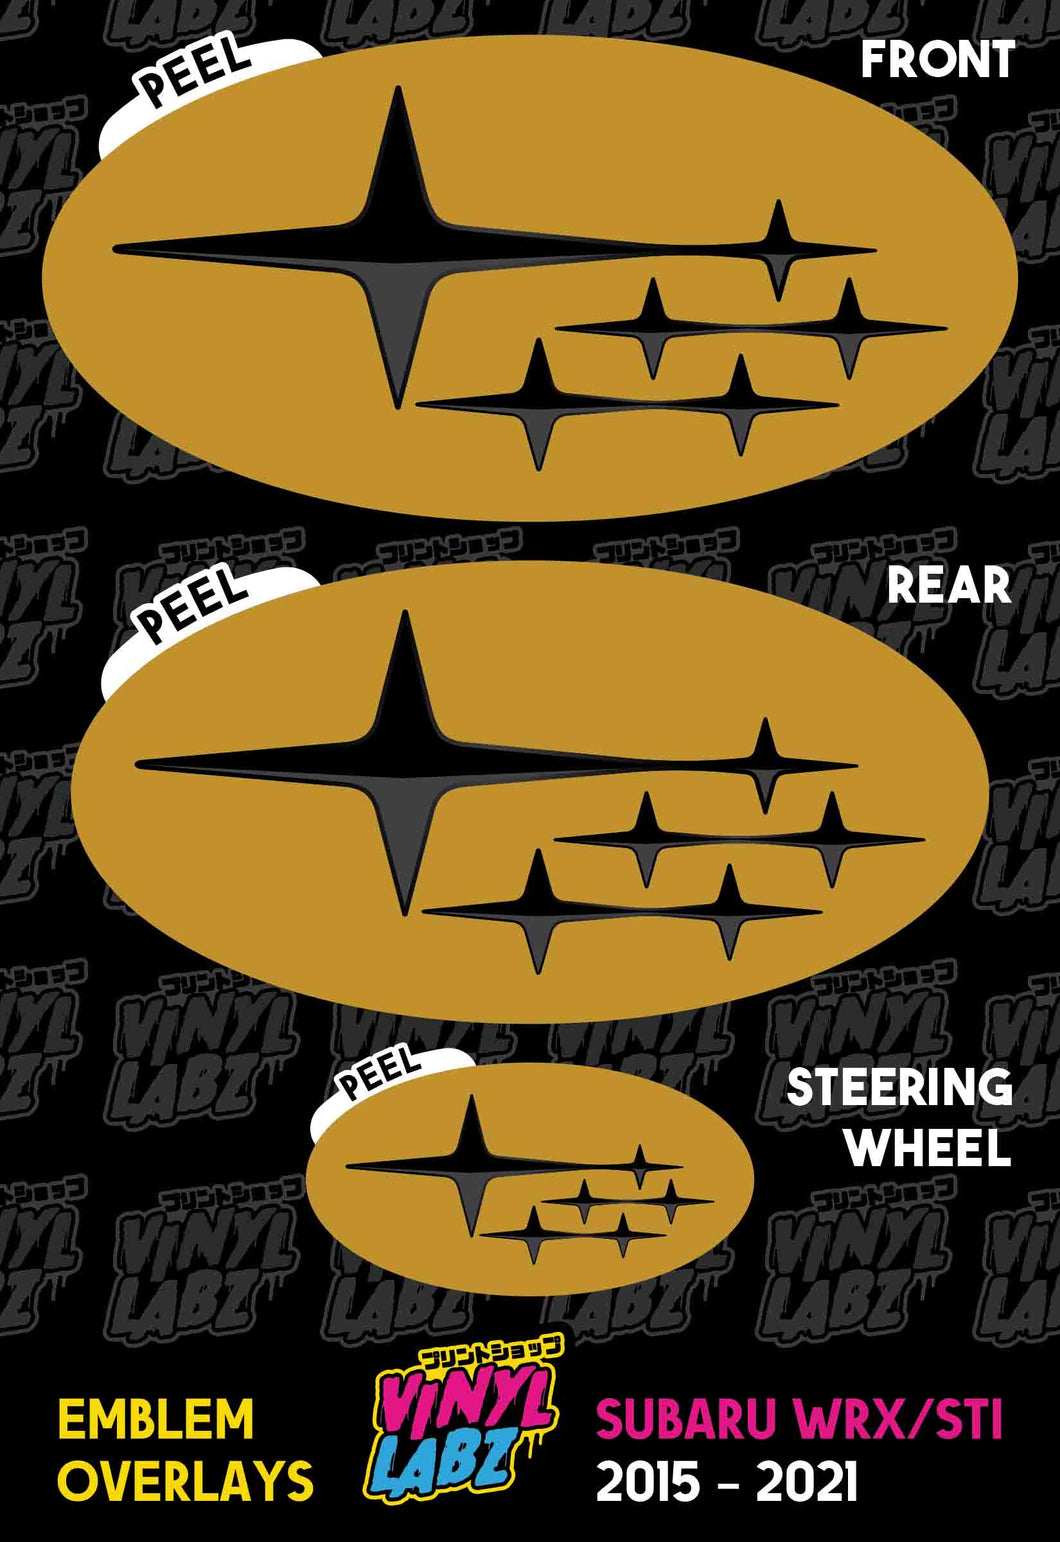 Subaru Vinyl Emblem Overlay (Gold and Black) | 2015-2021 Subaru WRX/STI